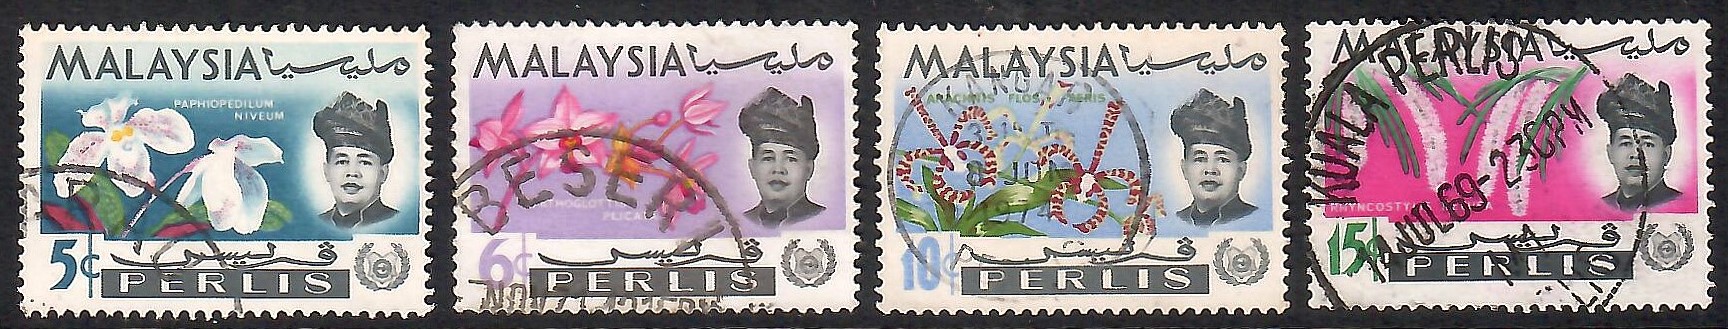 1965 Orchid series with Arau, Beseri, Kangar & Kuala Perlis cancels